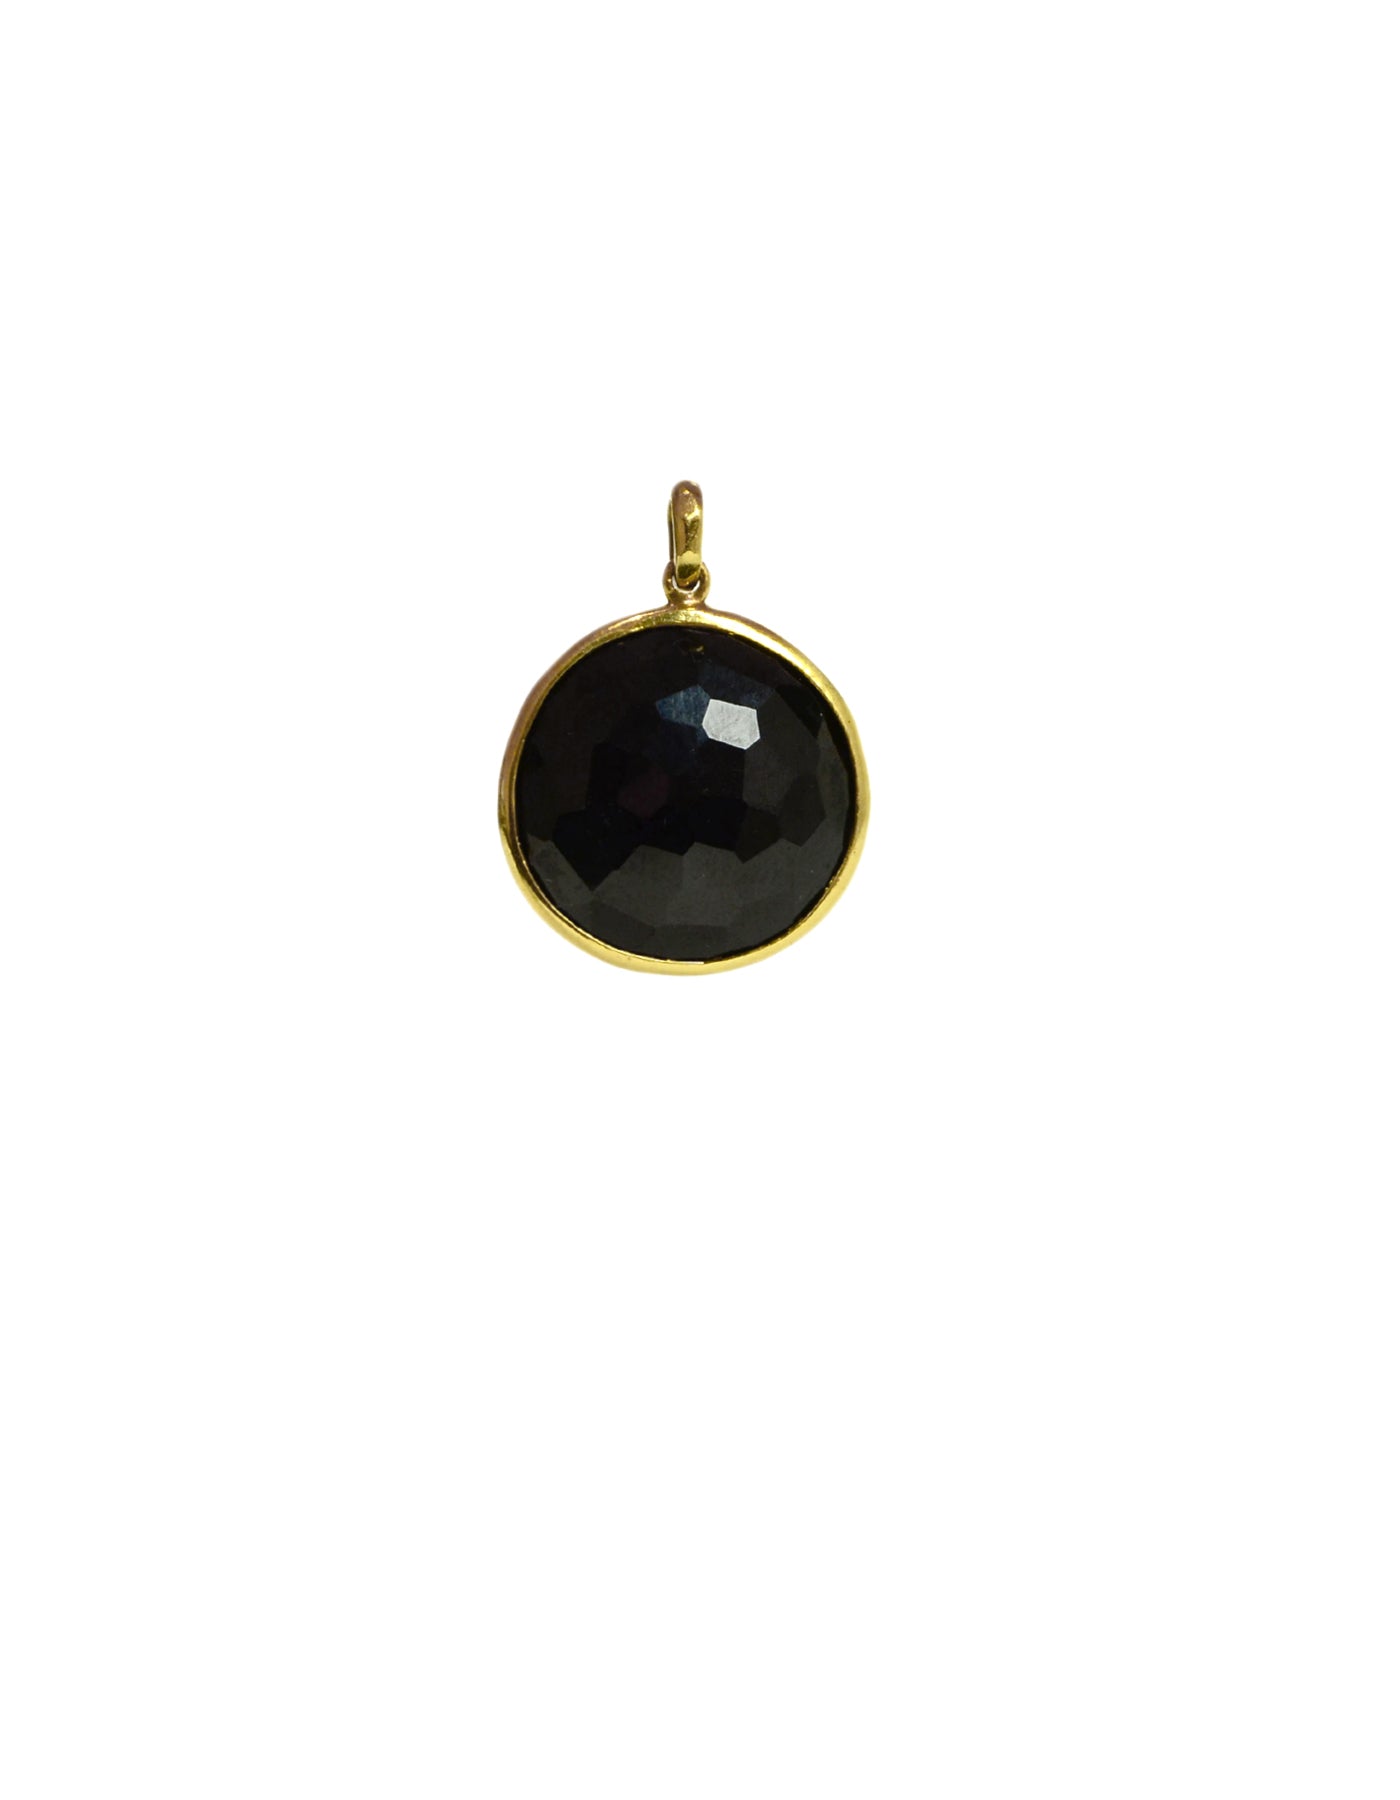 Ippolita Black Onyx Bezel Charm Pendant set in 18K Gold